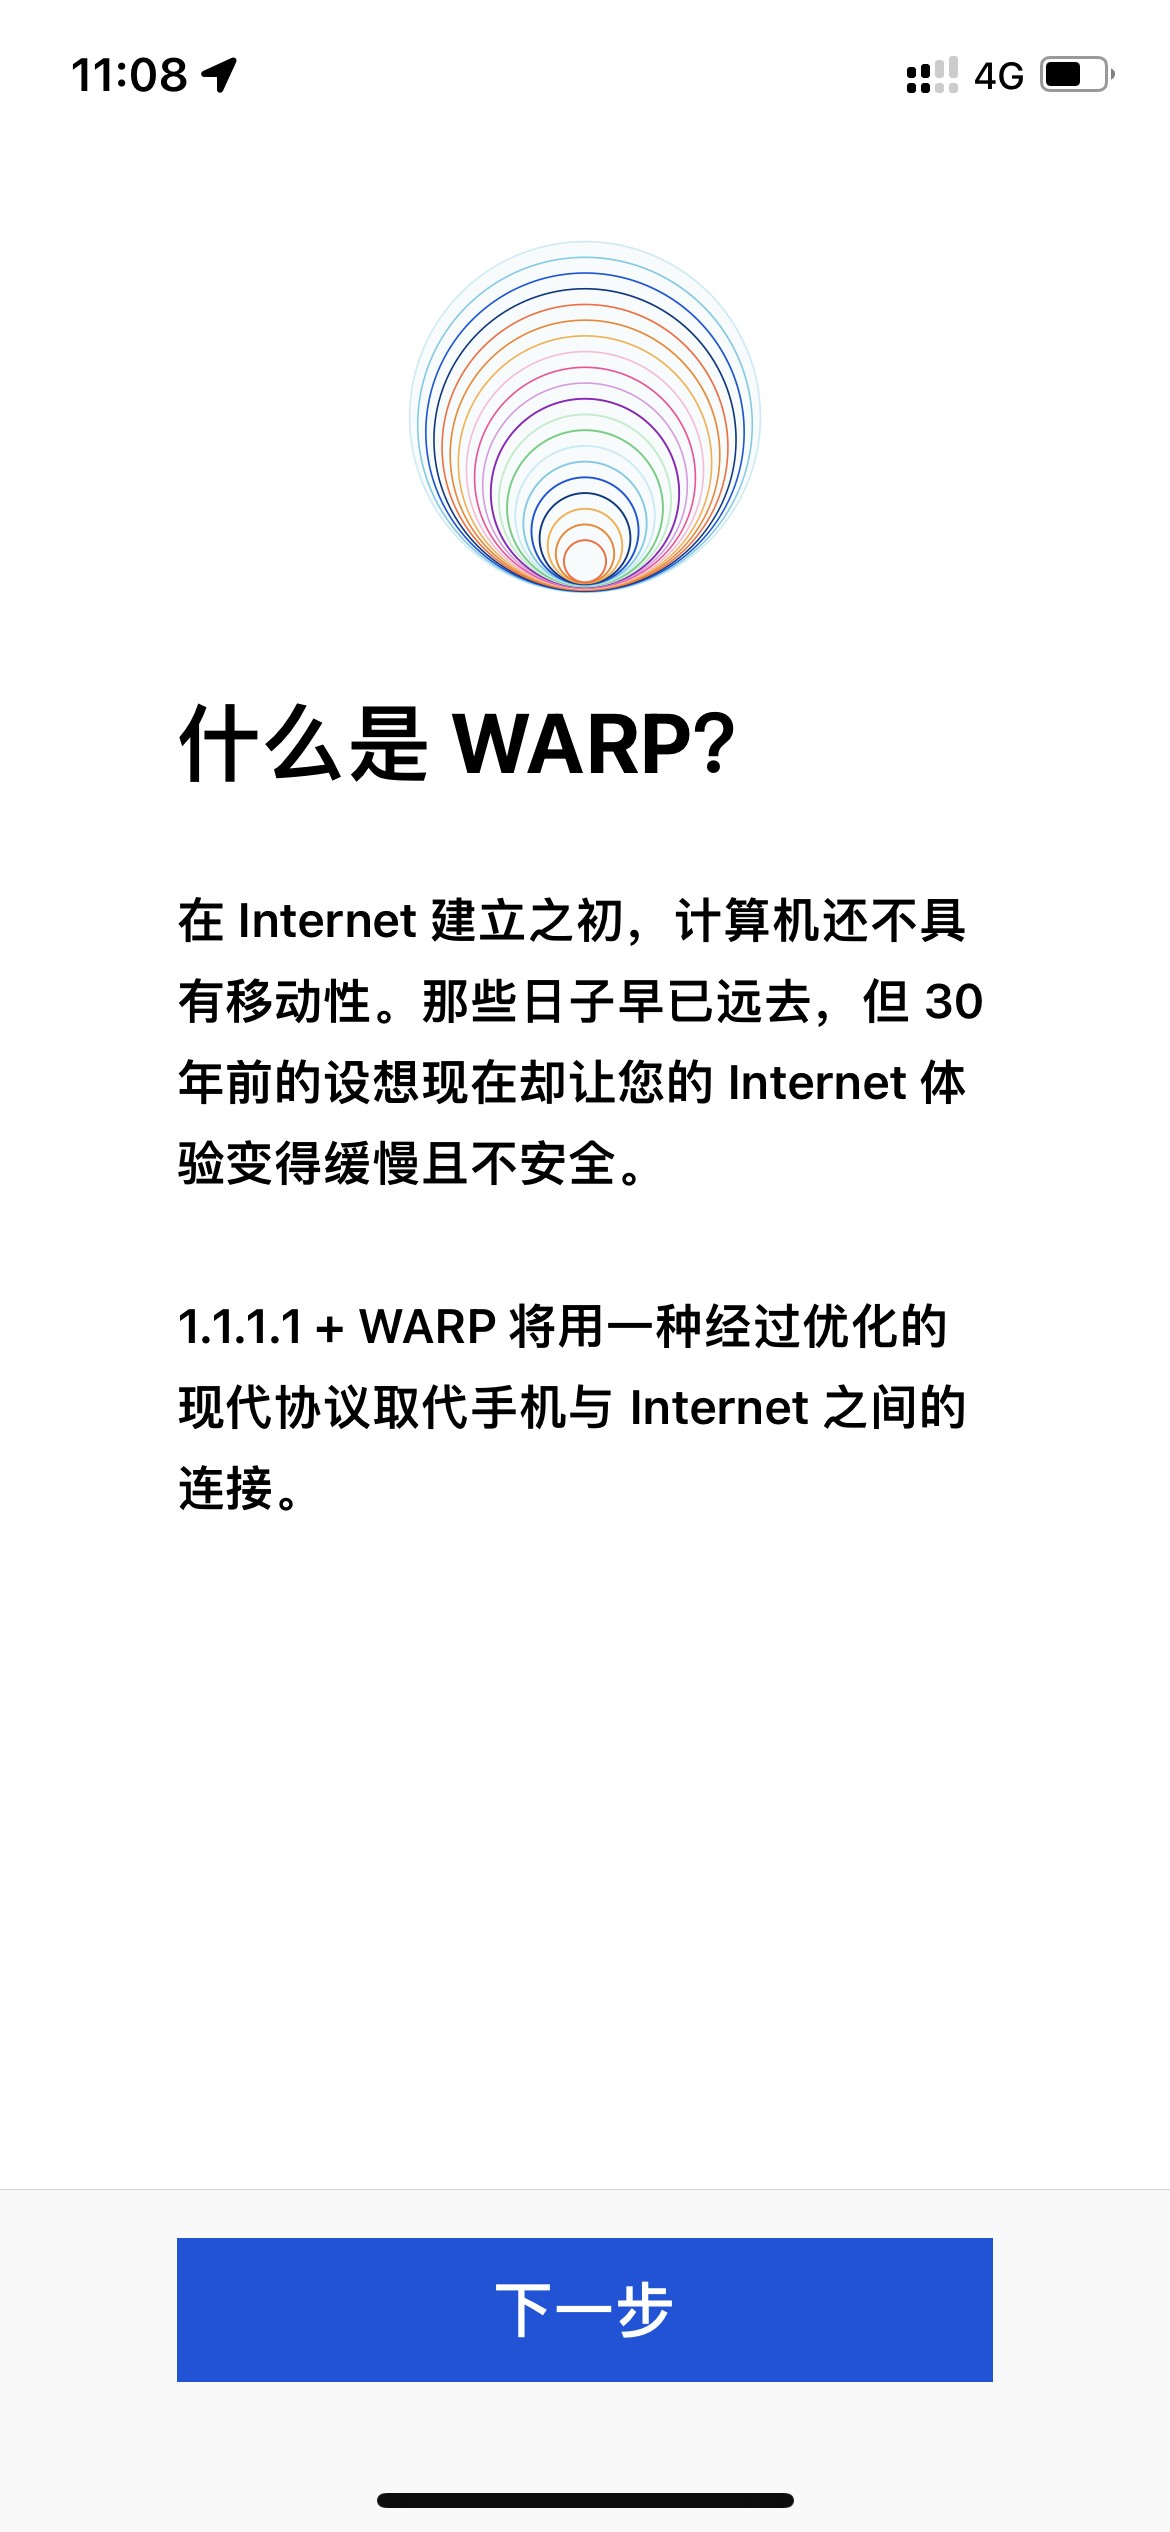 什么是WARP？